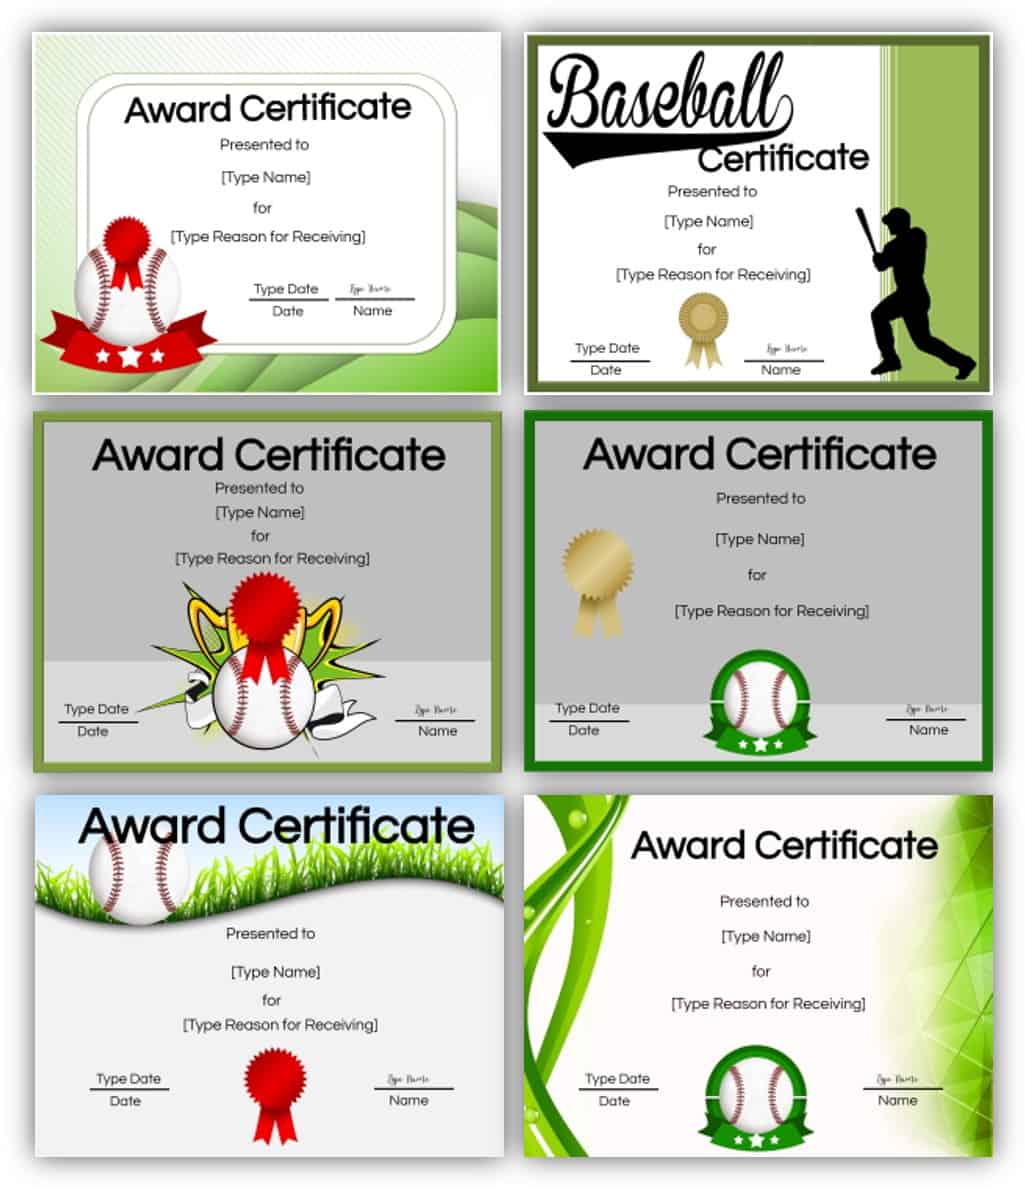 FREE Printable and Editable Baseball Awards with Certificate Templates